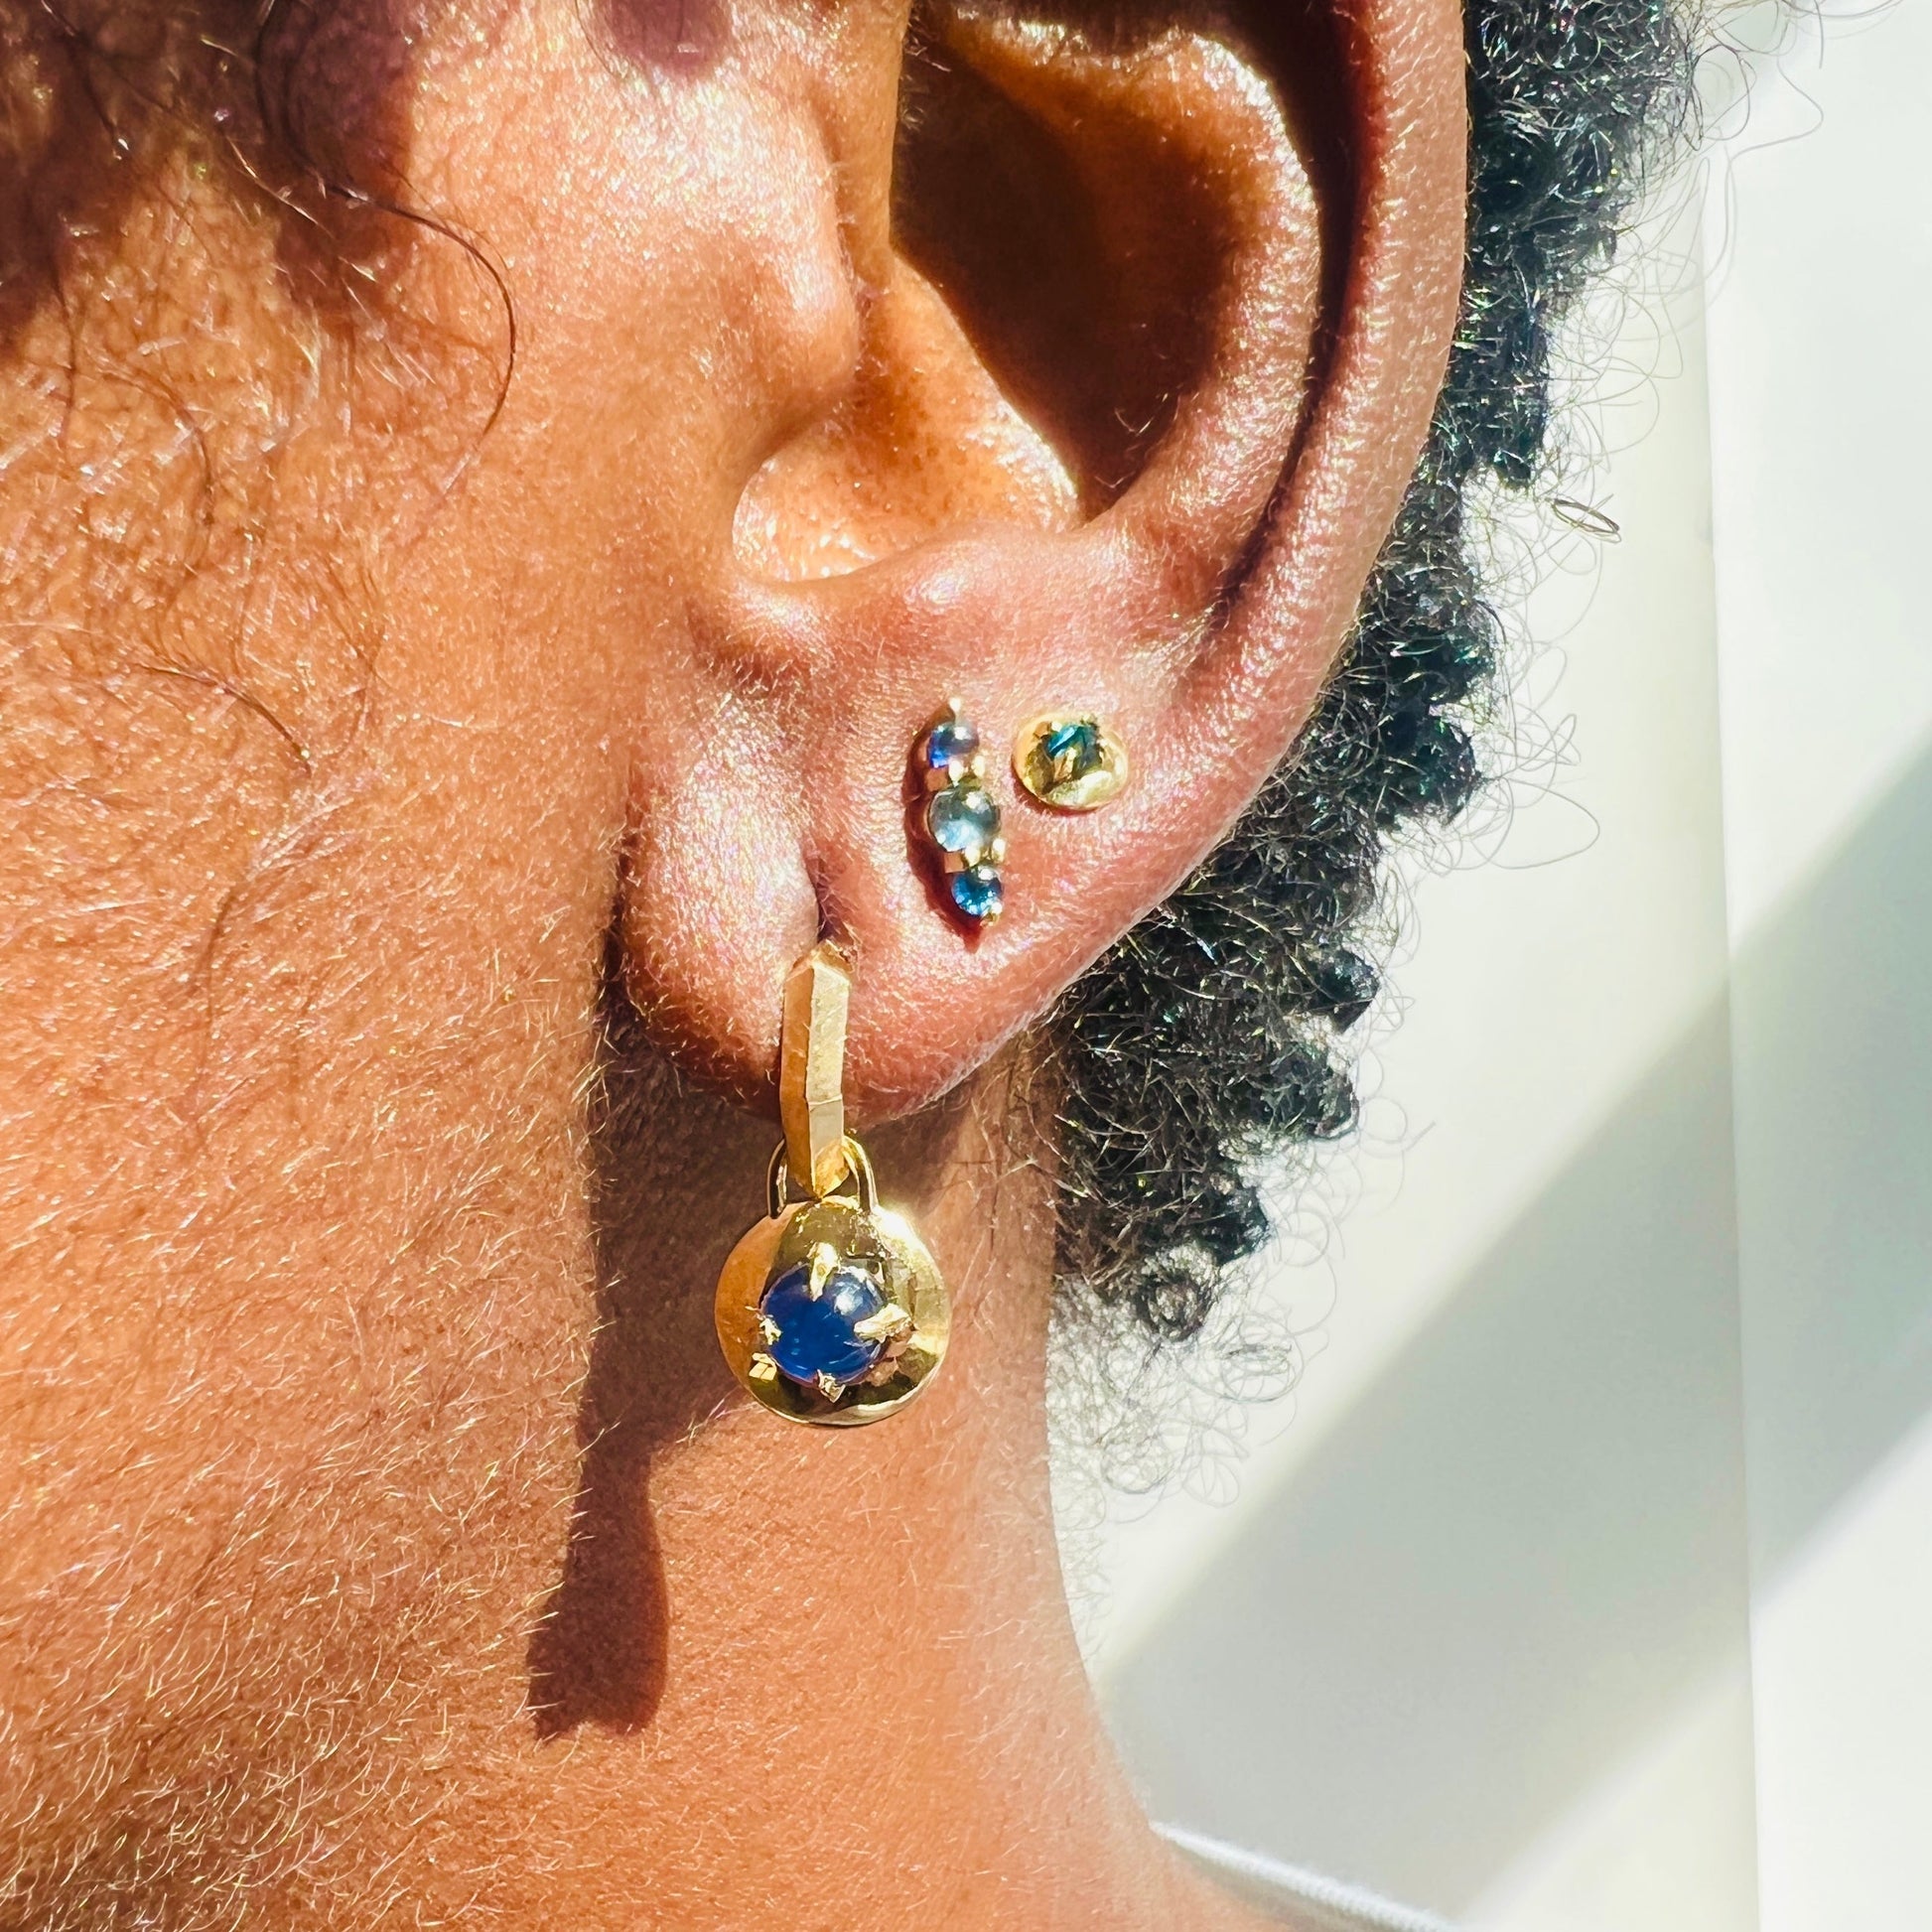 Three sapphire and diamond earrings on models ear